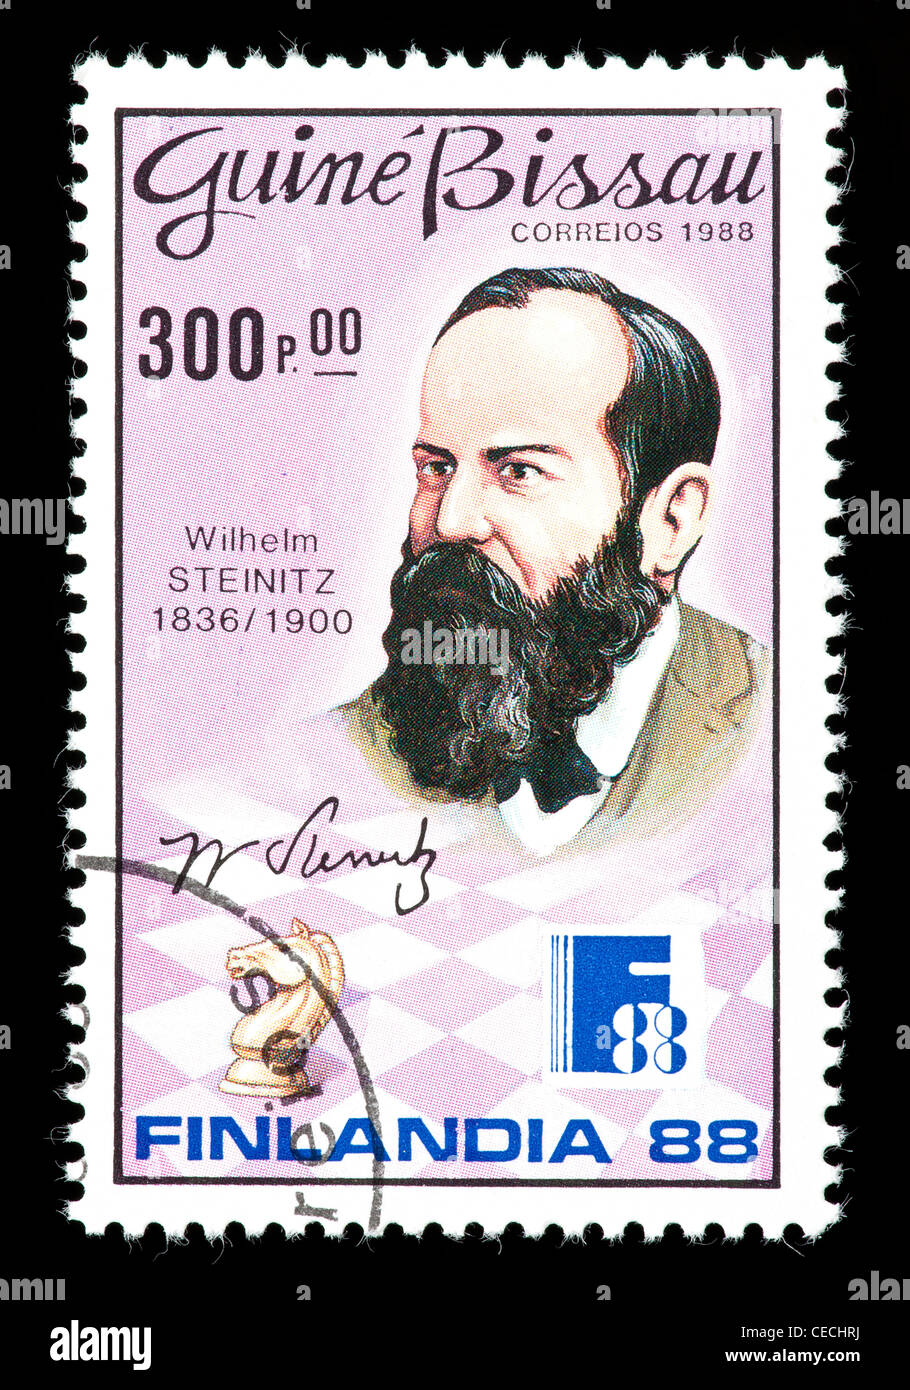 Postage stamp from Guinea-Bissau depicting Wilhelm Steinitz, former world chess champion Stock Photo